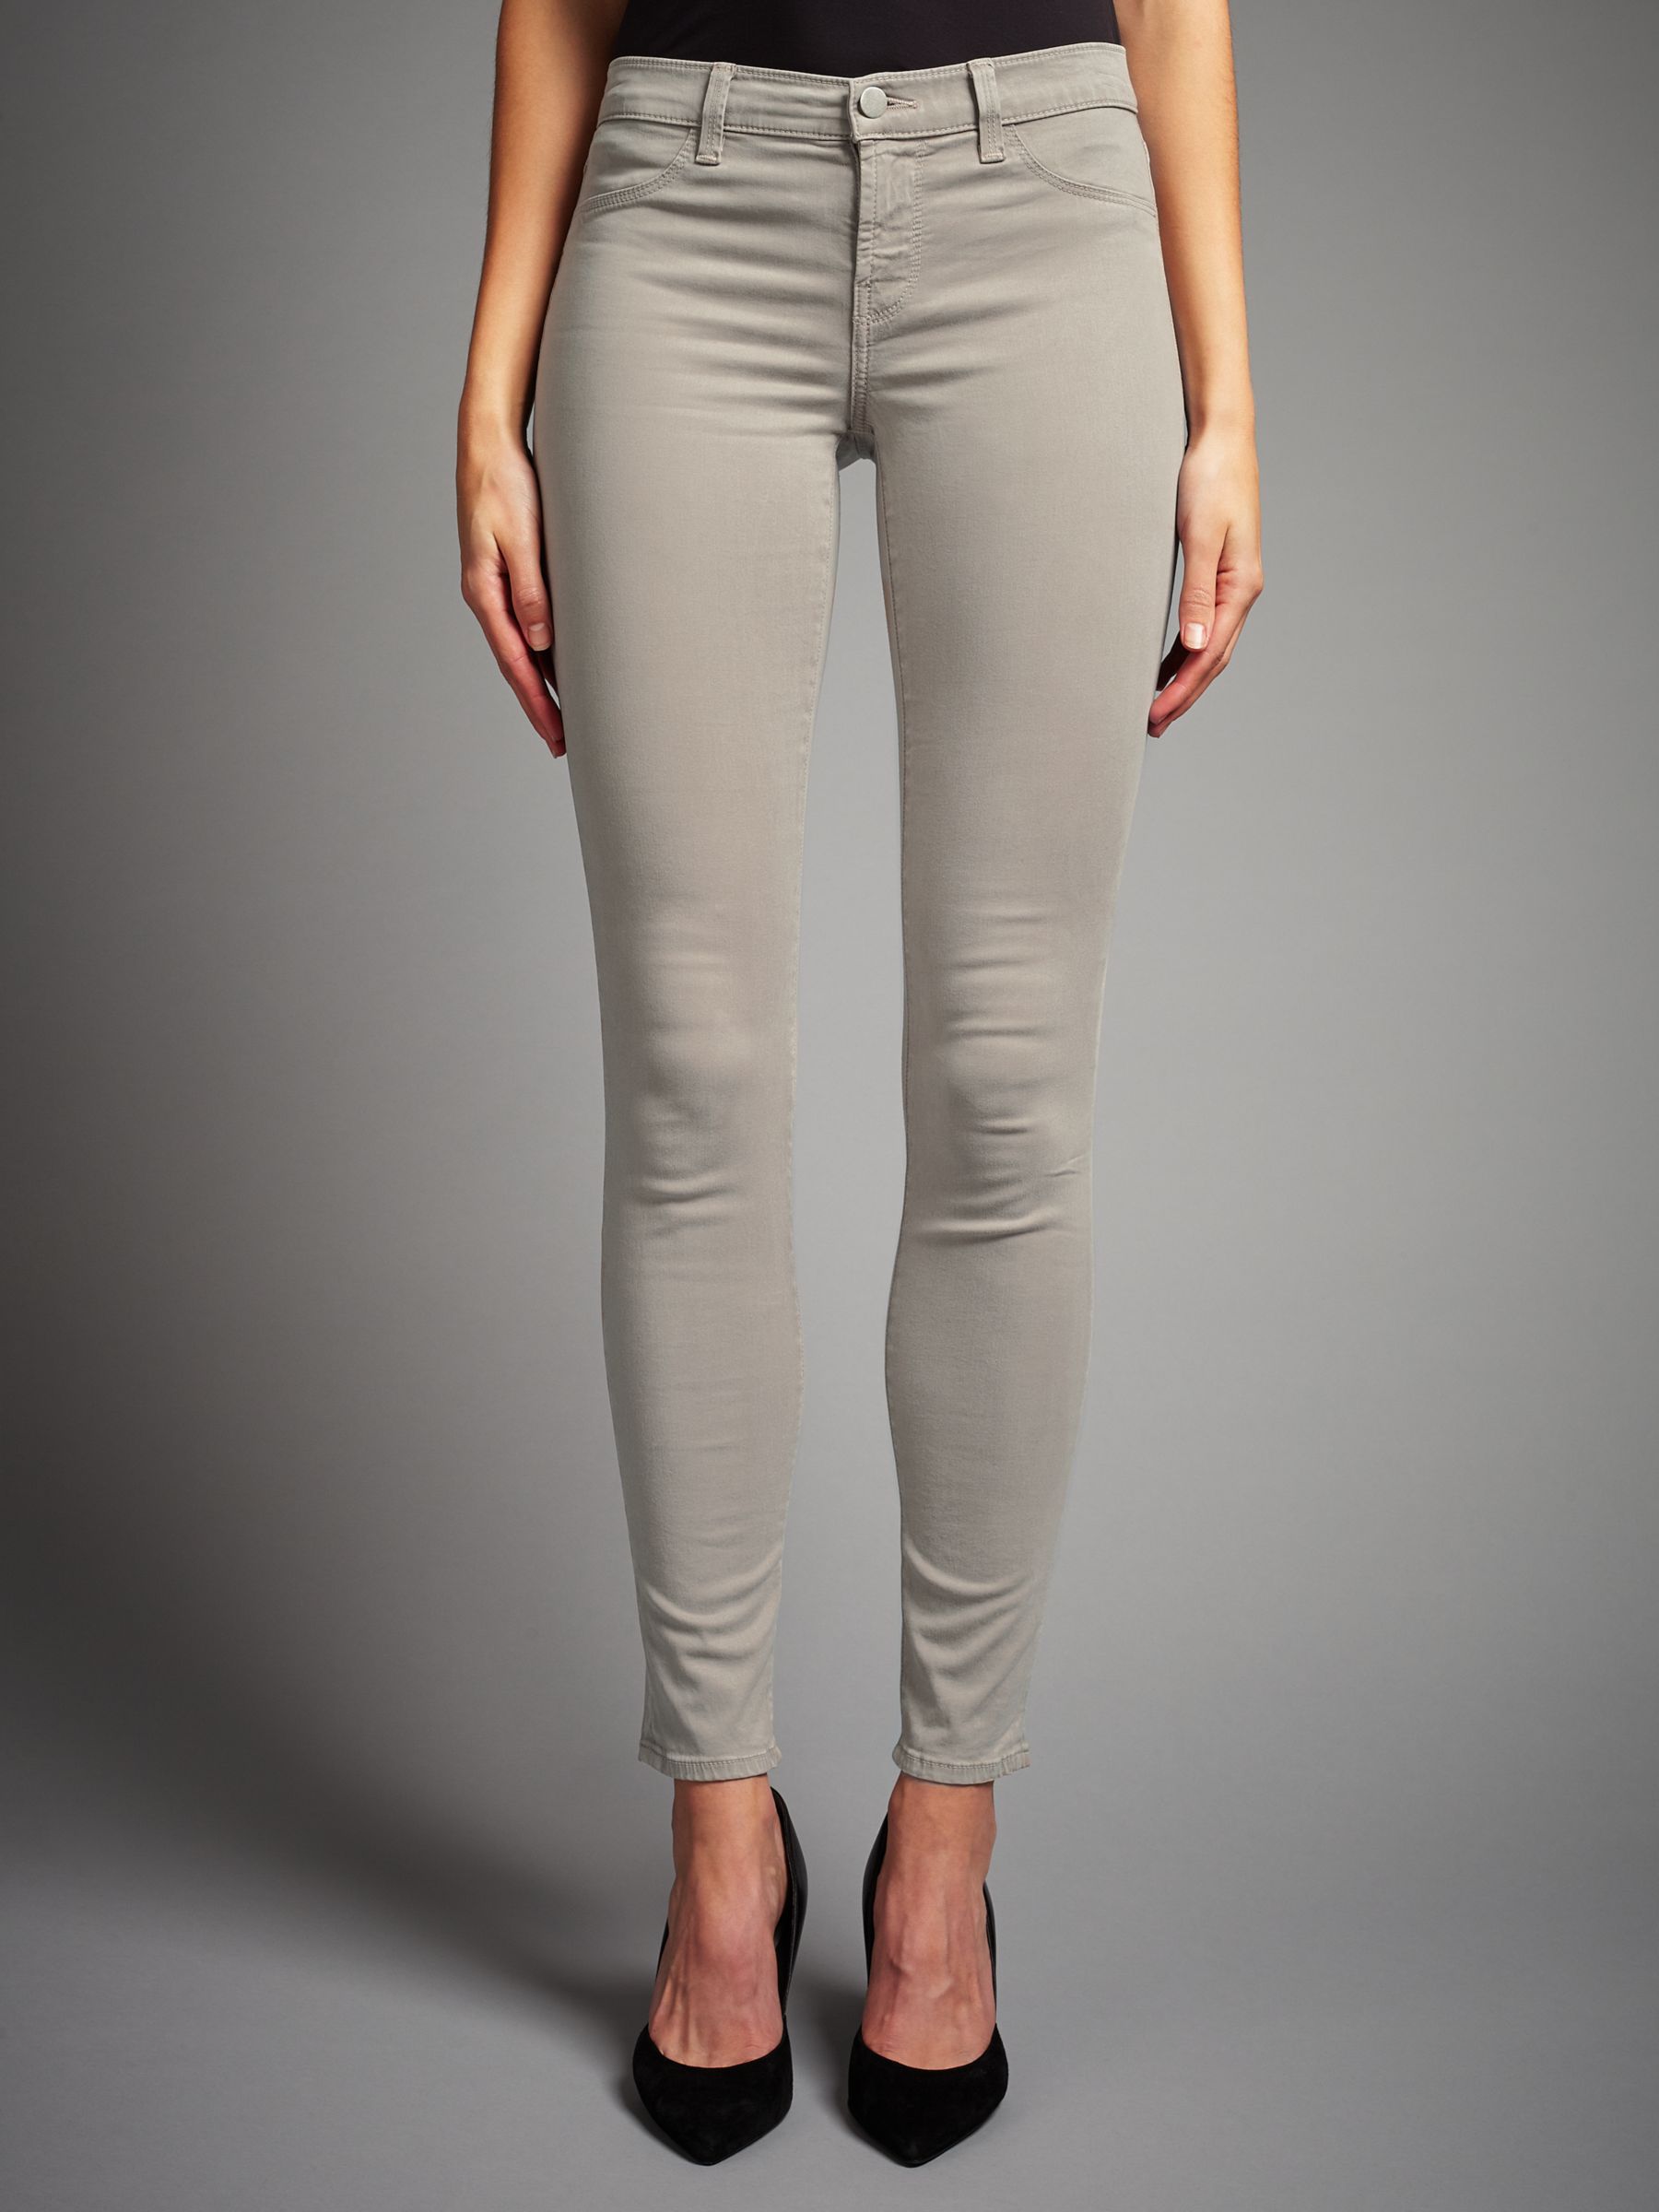 j brand grey skinny jeans